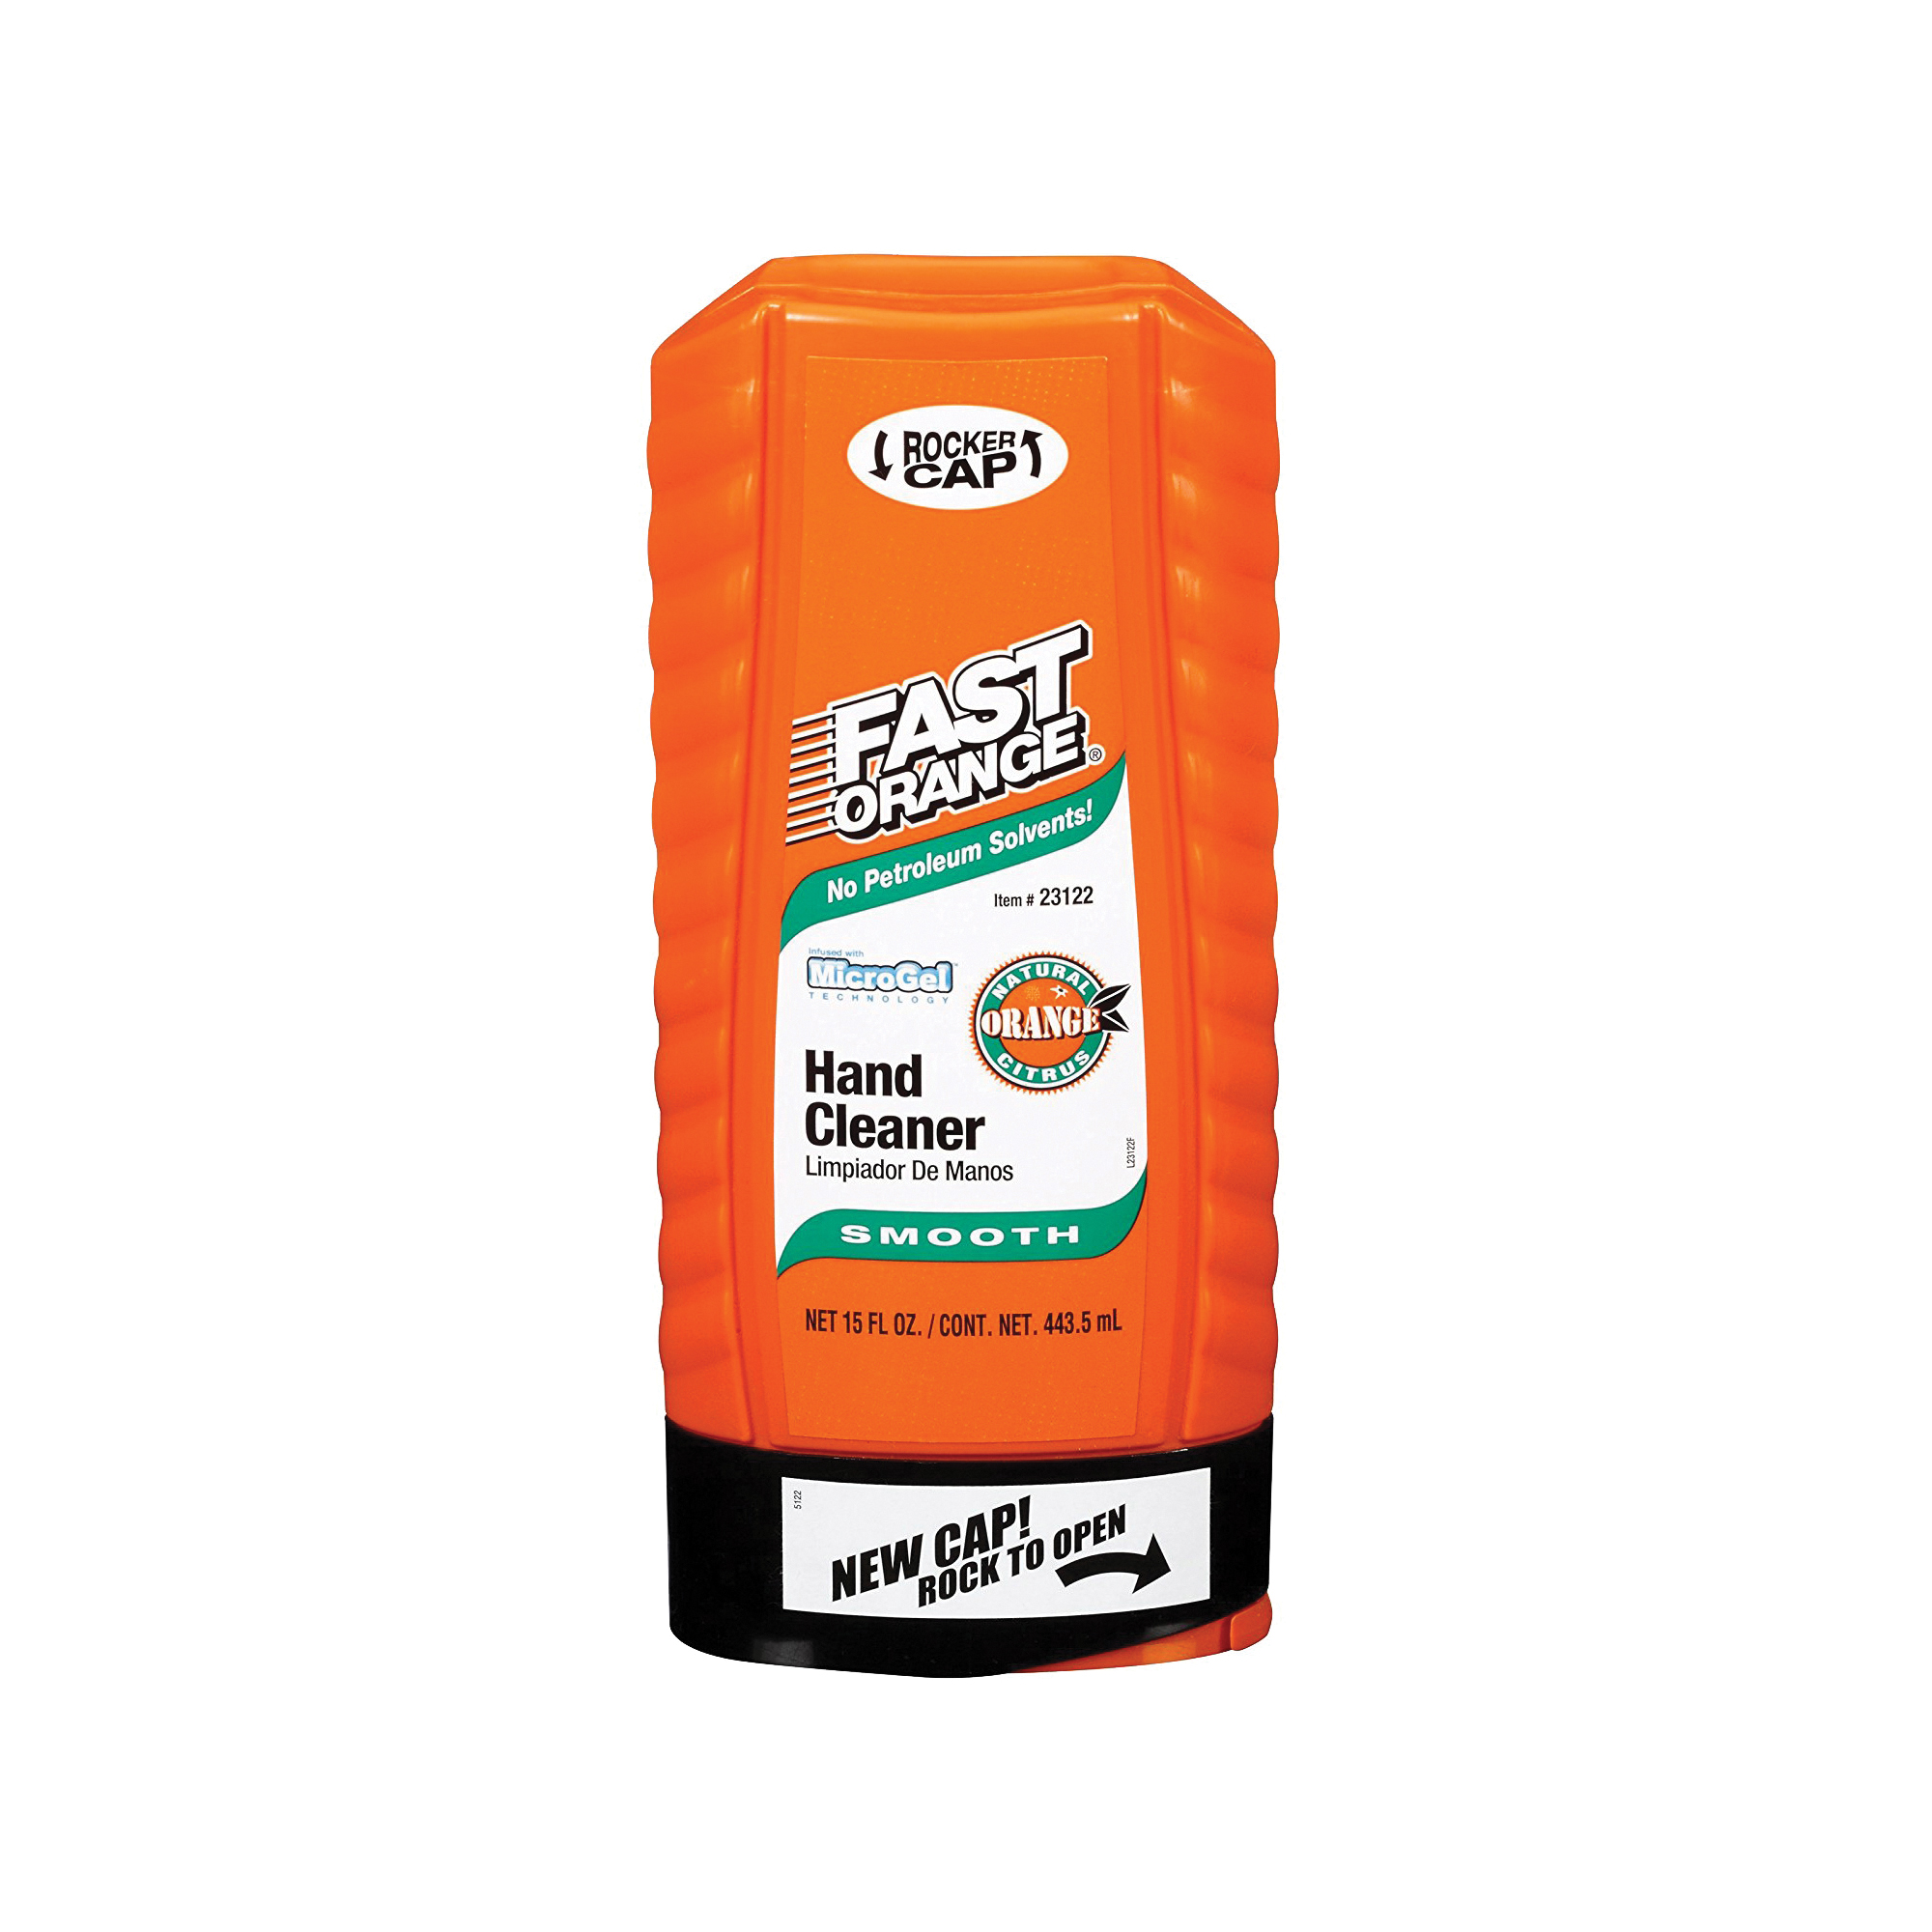 Permatex 25618 Fast Orange Xtreme Hand Cleaner, 1 Gallon